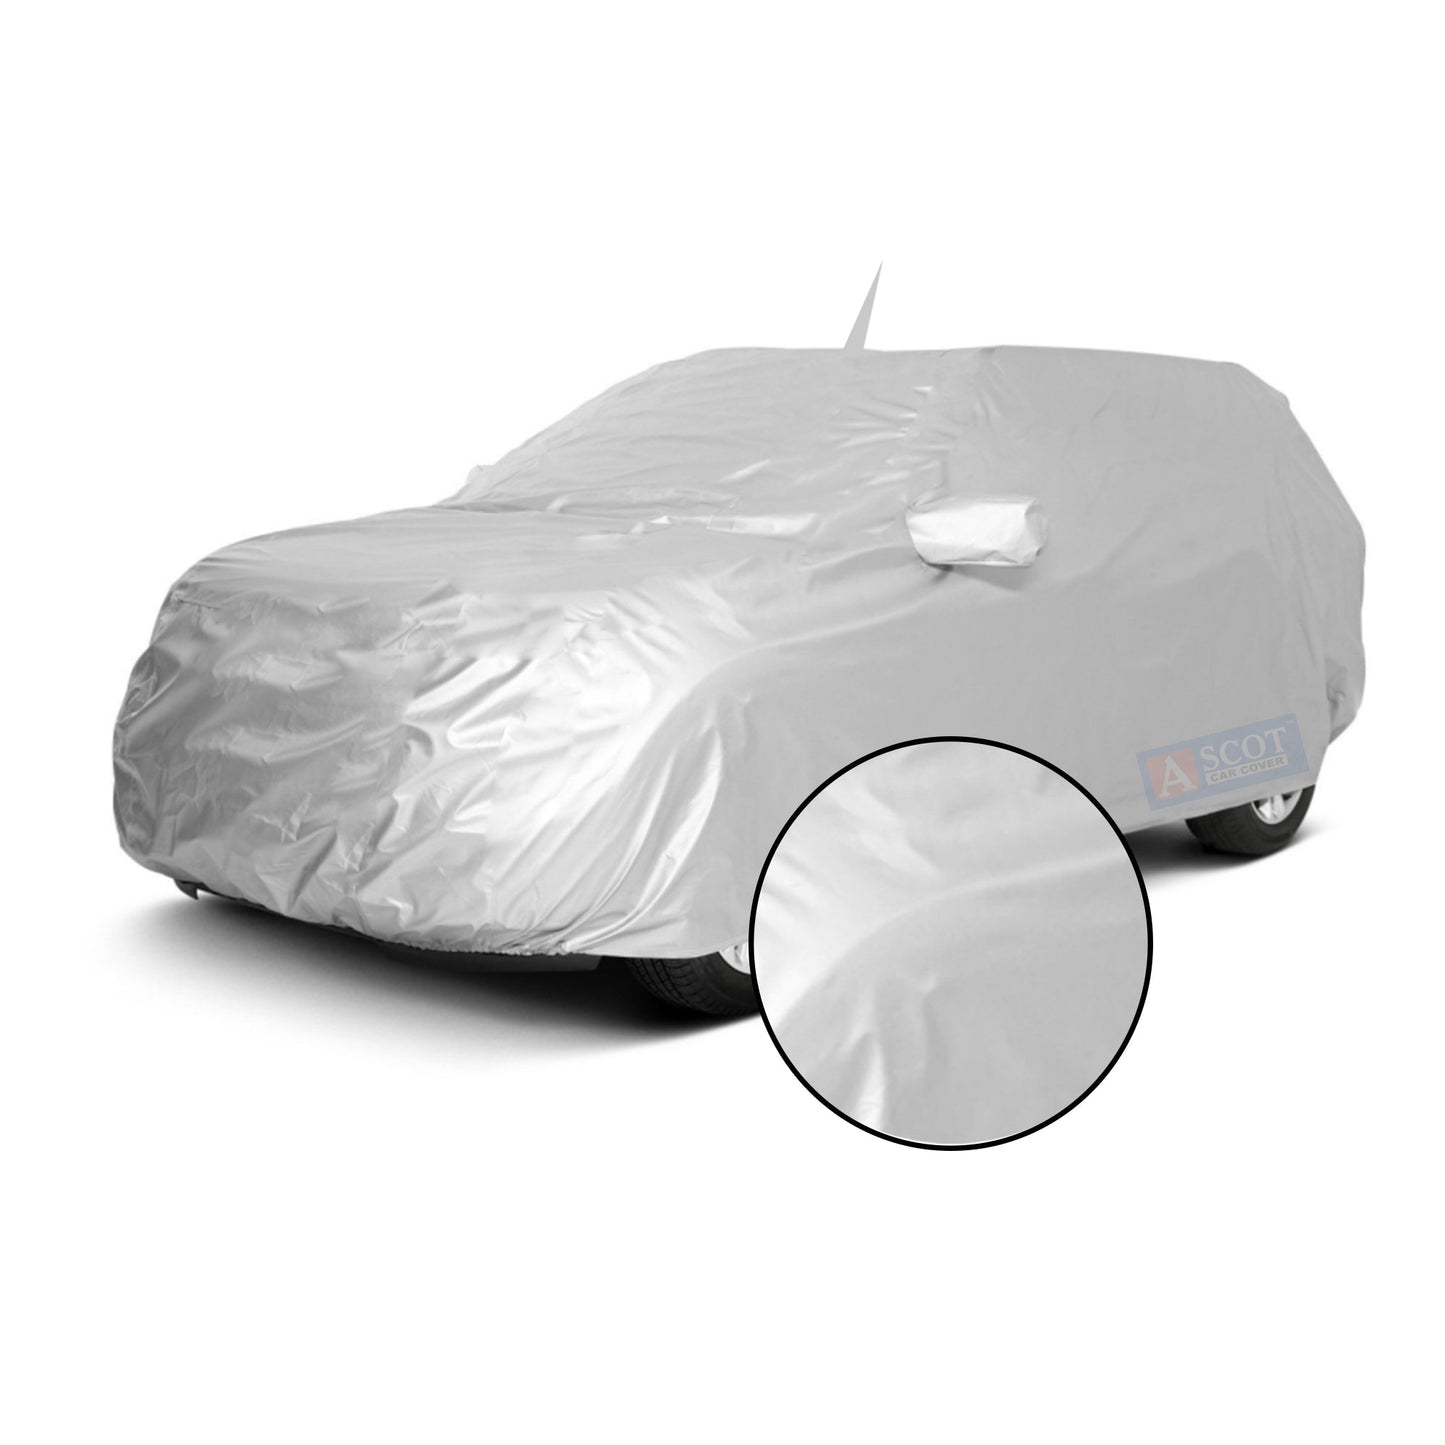 Ascot Skoda Octavia 2002-2010 Model Car Body Cover Dust Proof, Trippel Stitched